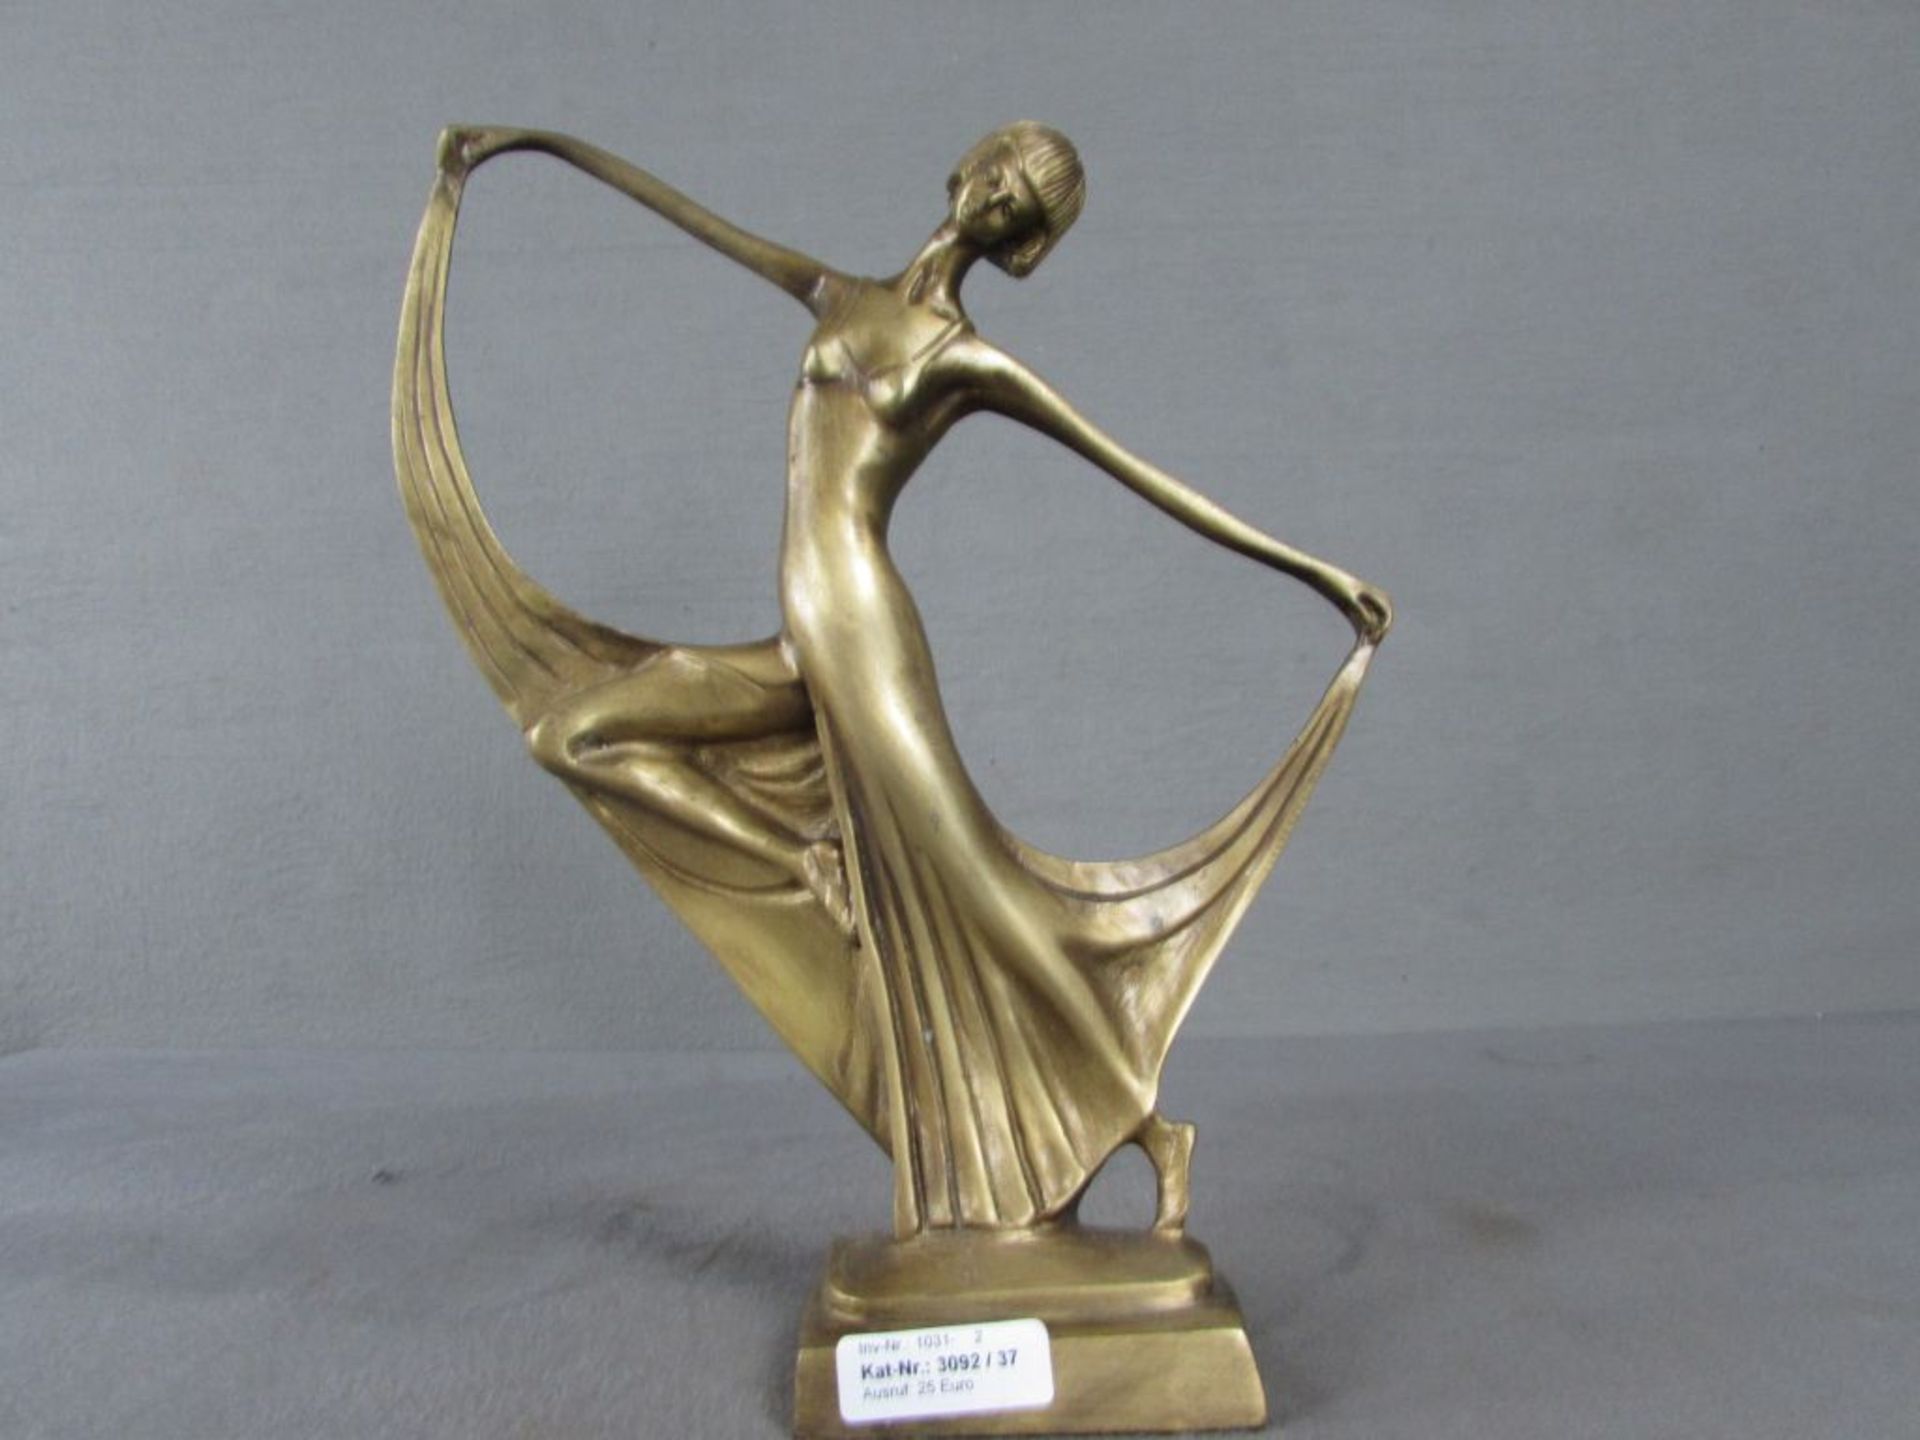 Skulptur in Art Deko tanzende Messingguß 37cm hoch